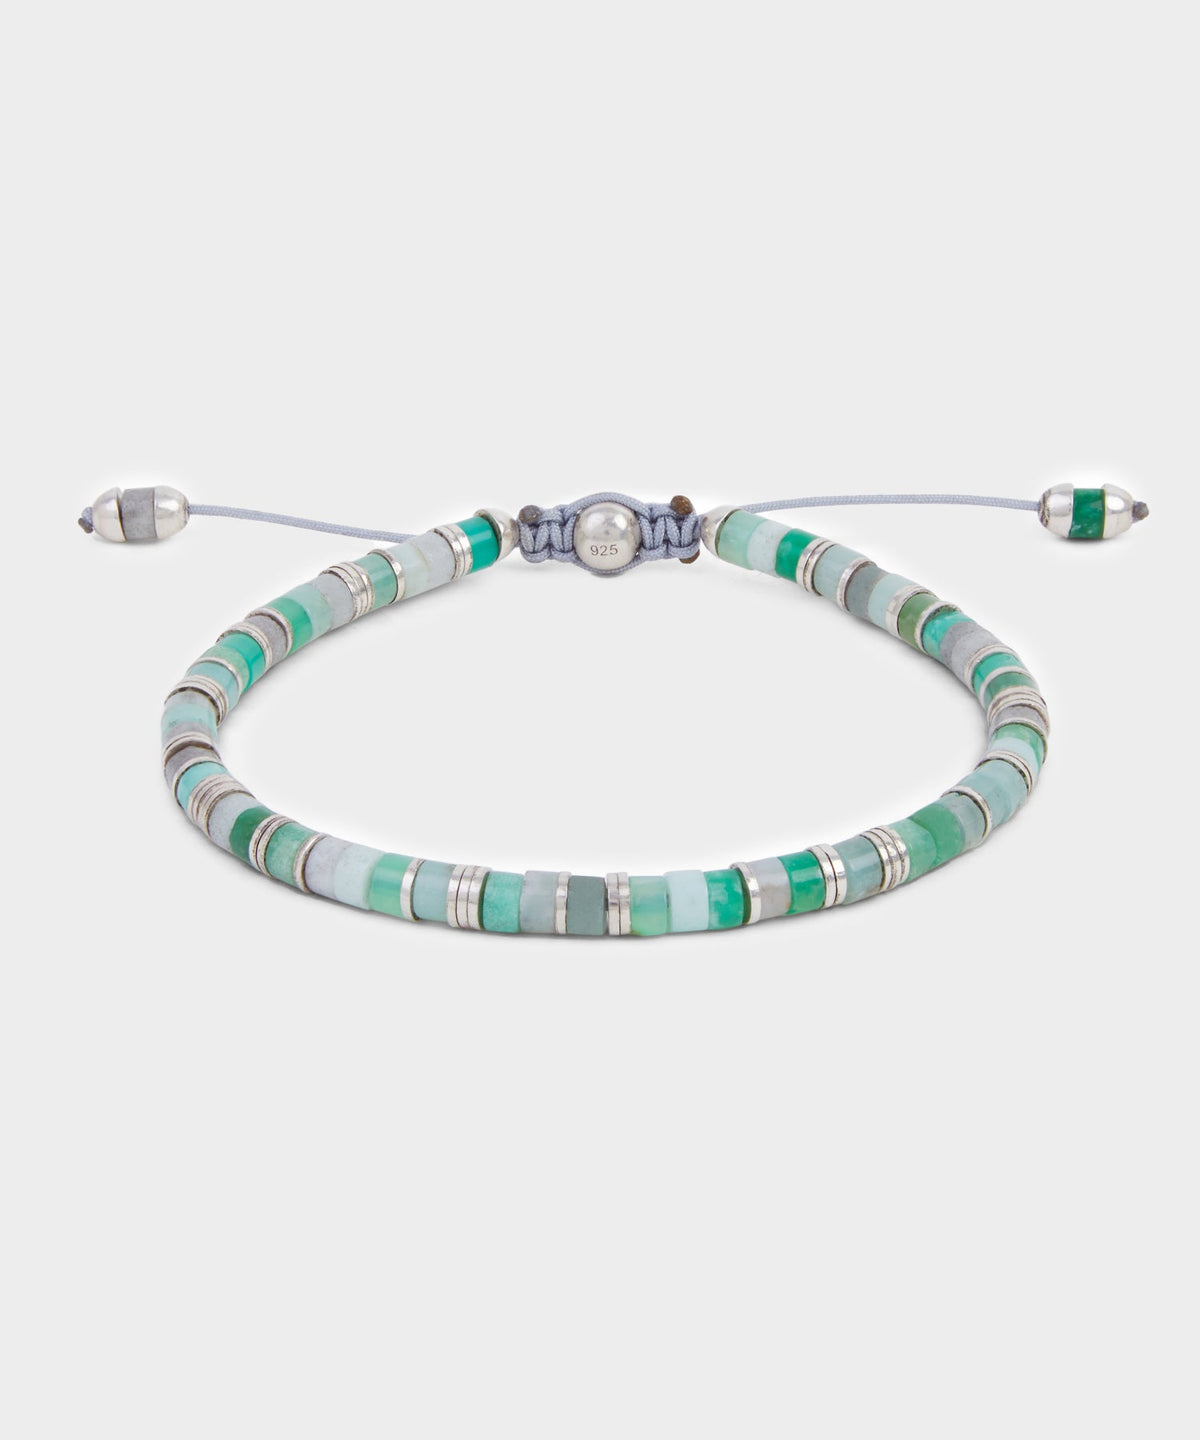 Maor Tucson Bracelet in Turquoise